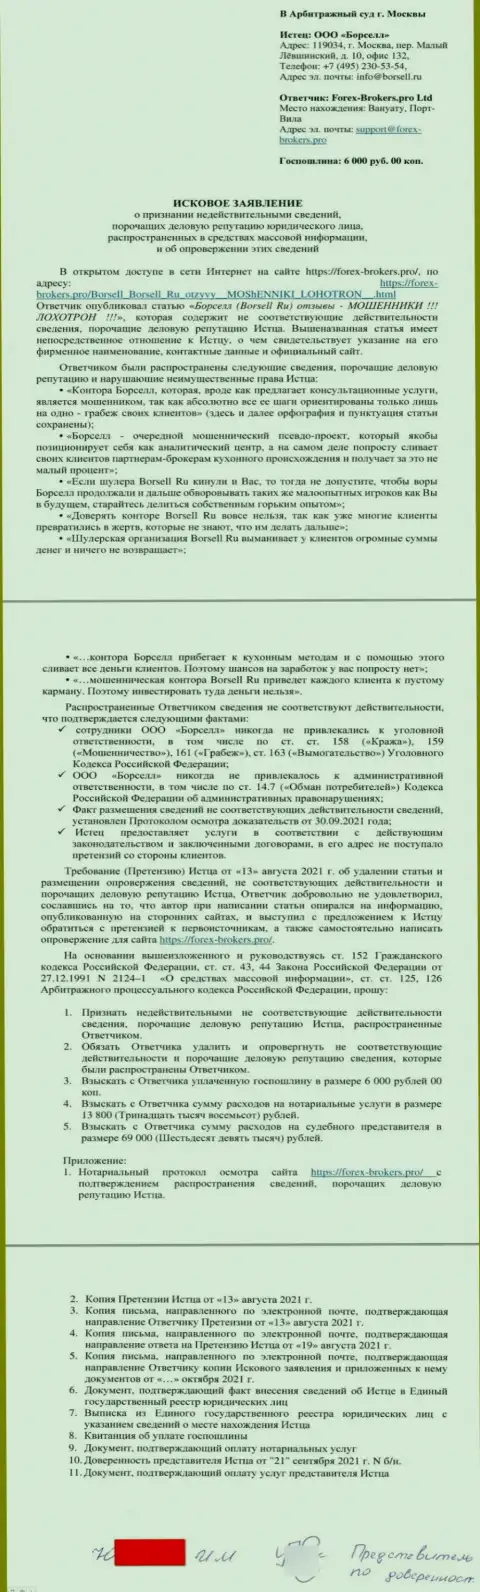 Непосредственно заявление в суд от представителя организации Borsell Ru